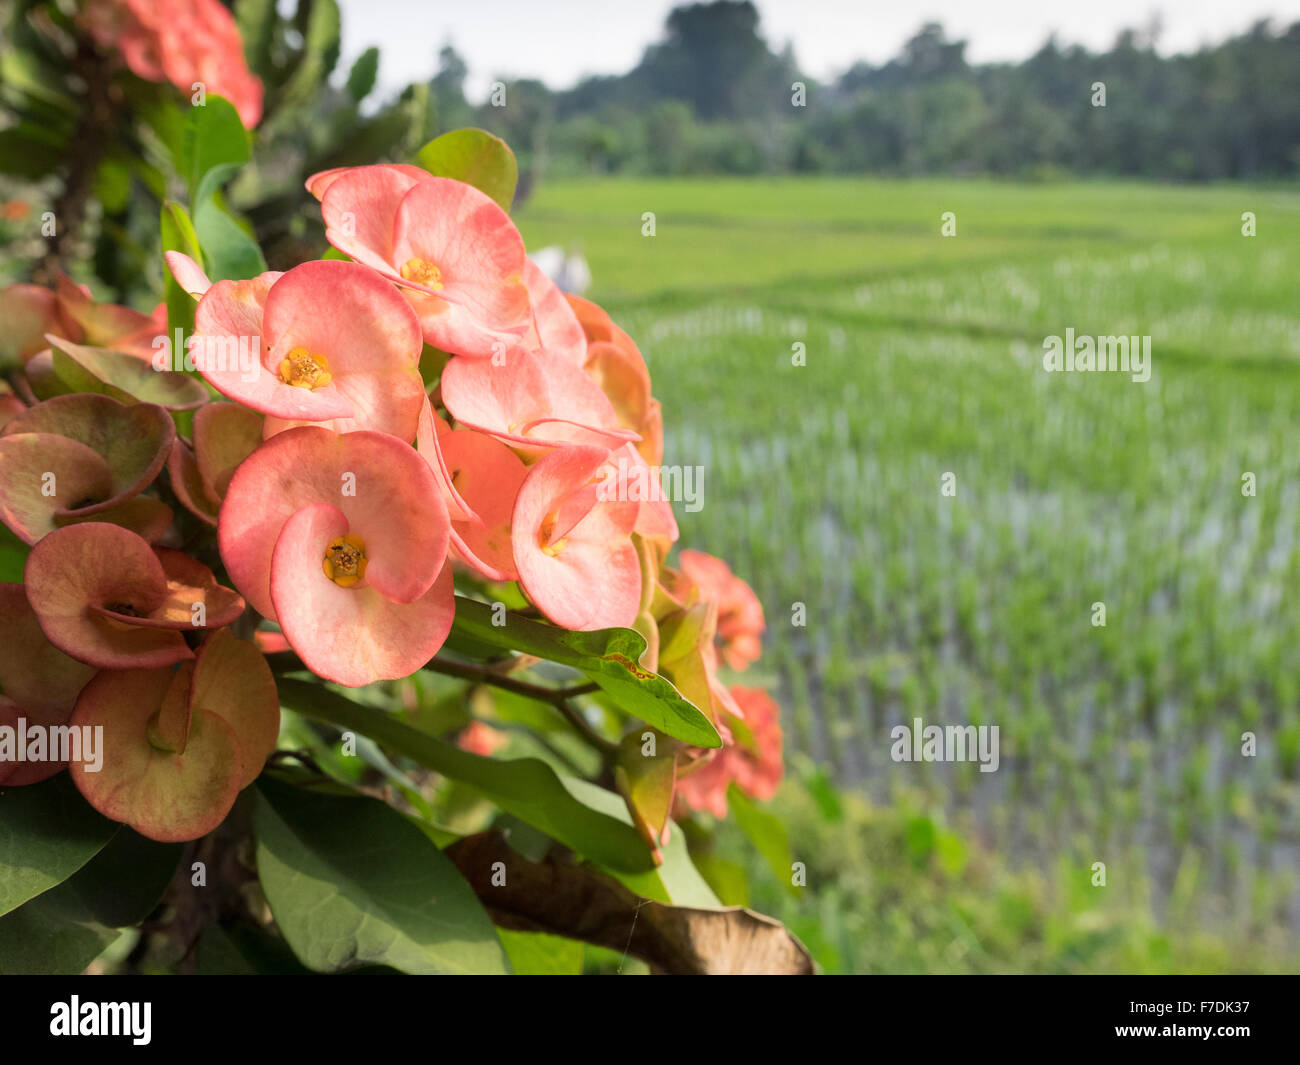 paddy field in Bali, Indonesia Stock Photo